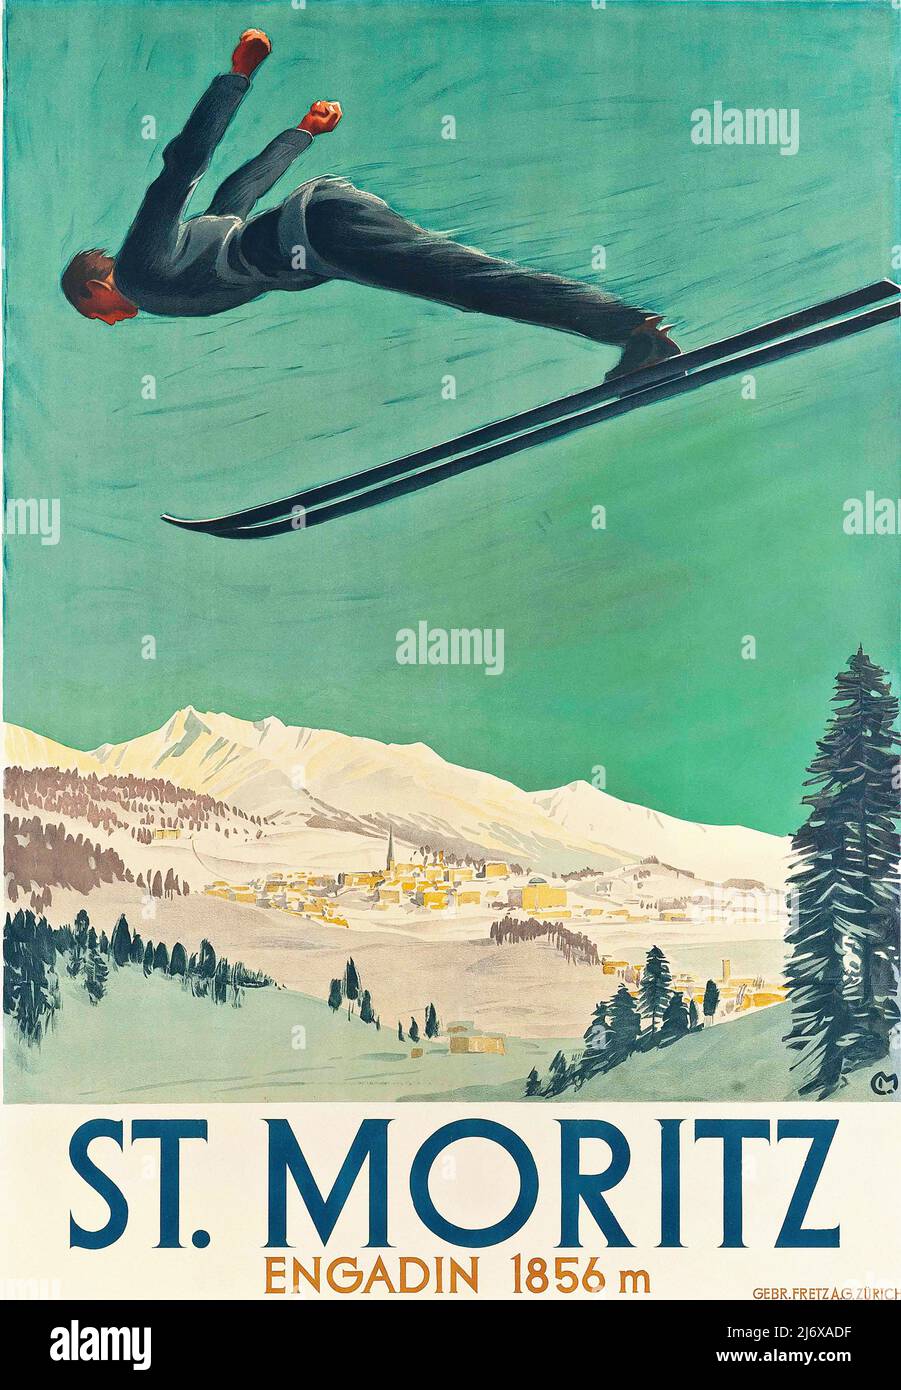 Vintage 1930s Swiss Ski Poster - Engadin - St. Moritz Stock Photo - Alamy